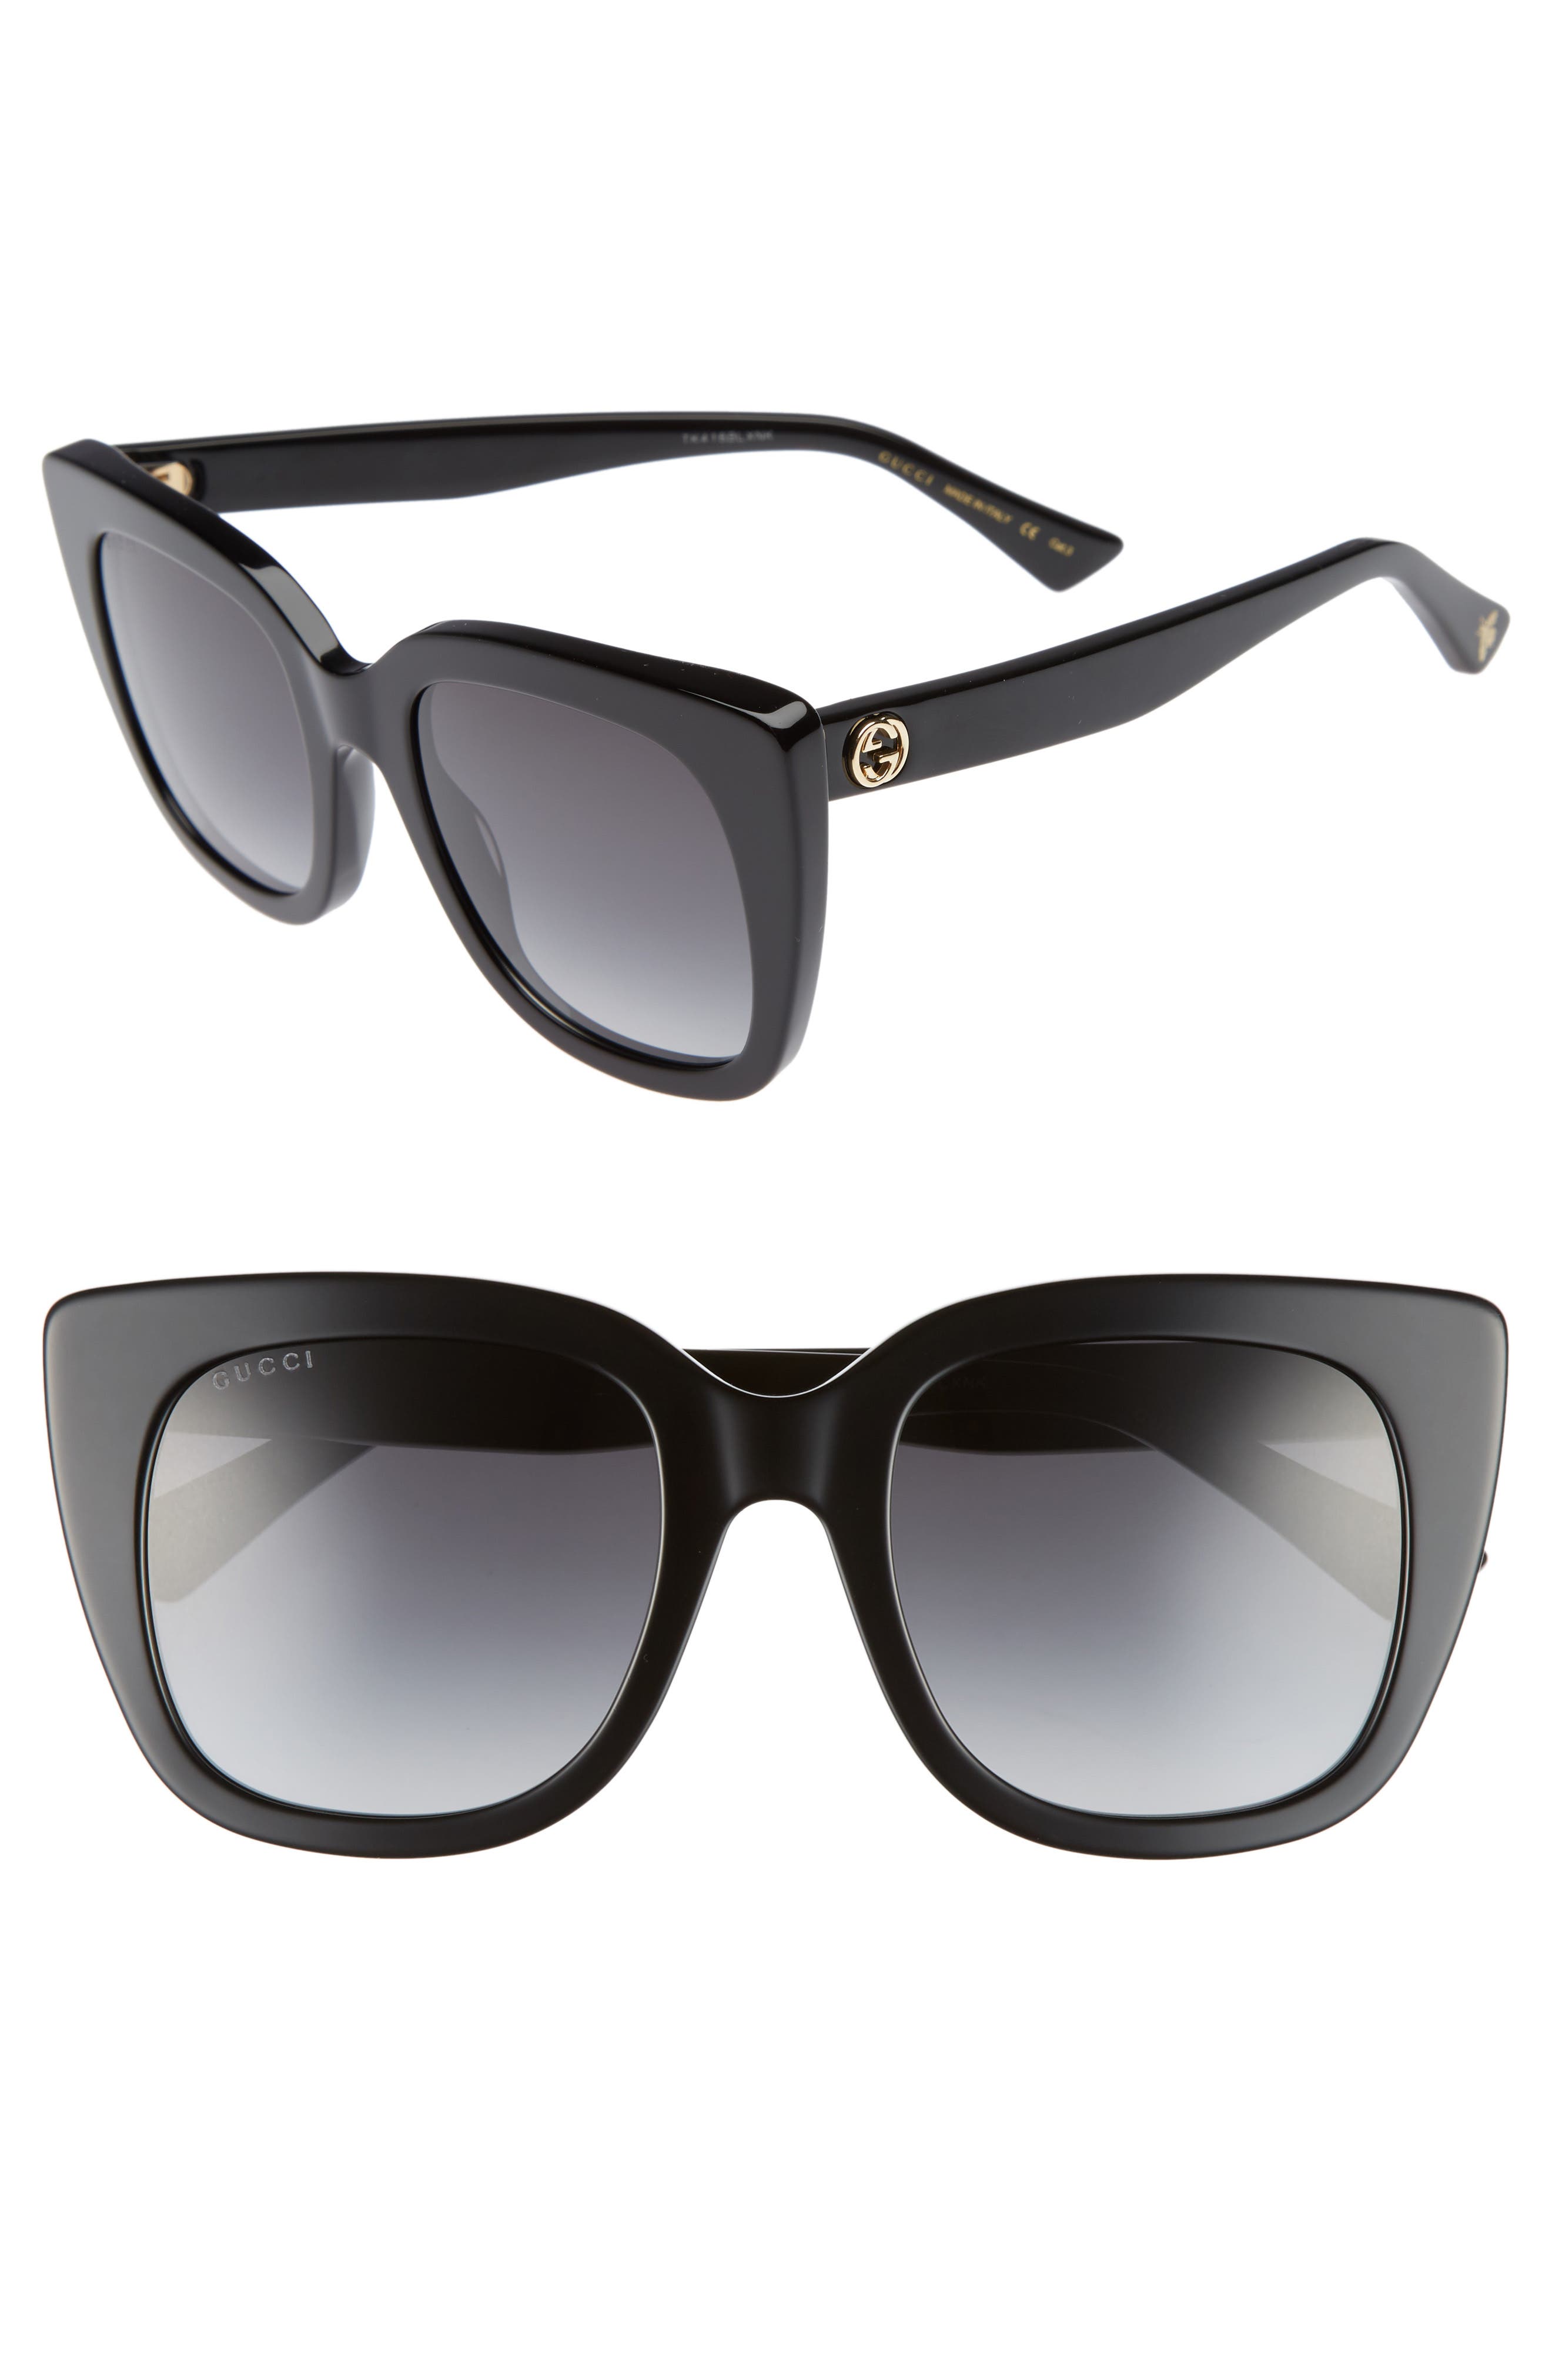 cateye gucci sunglasses women